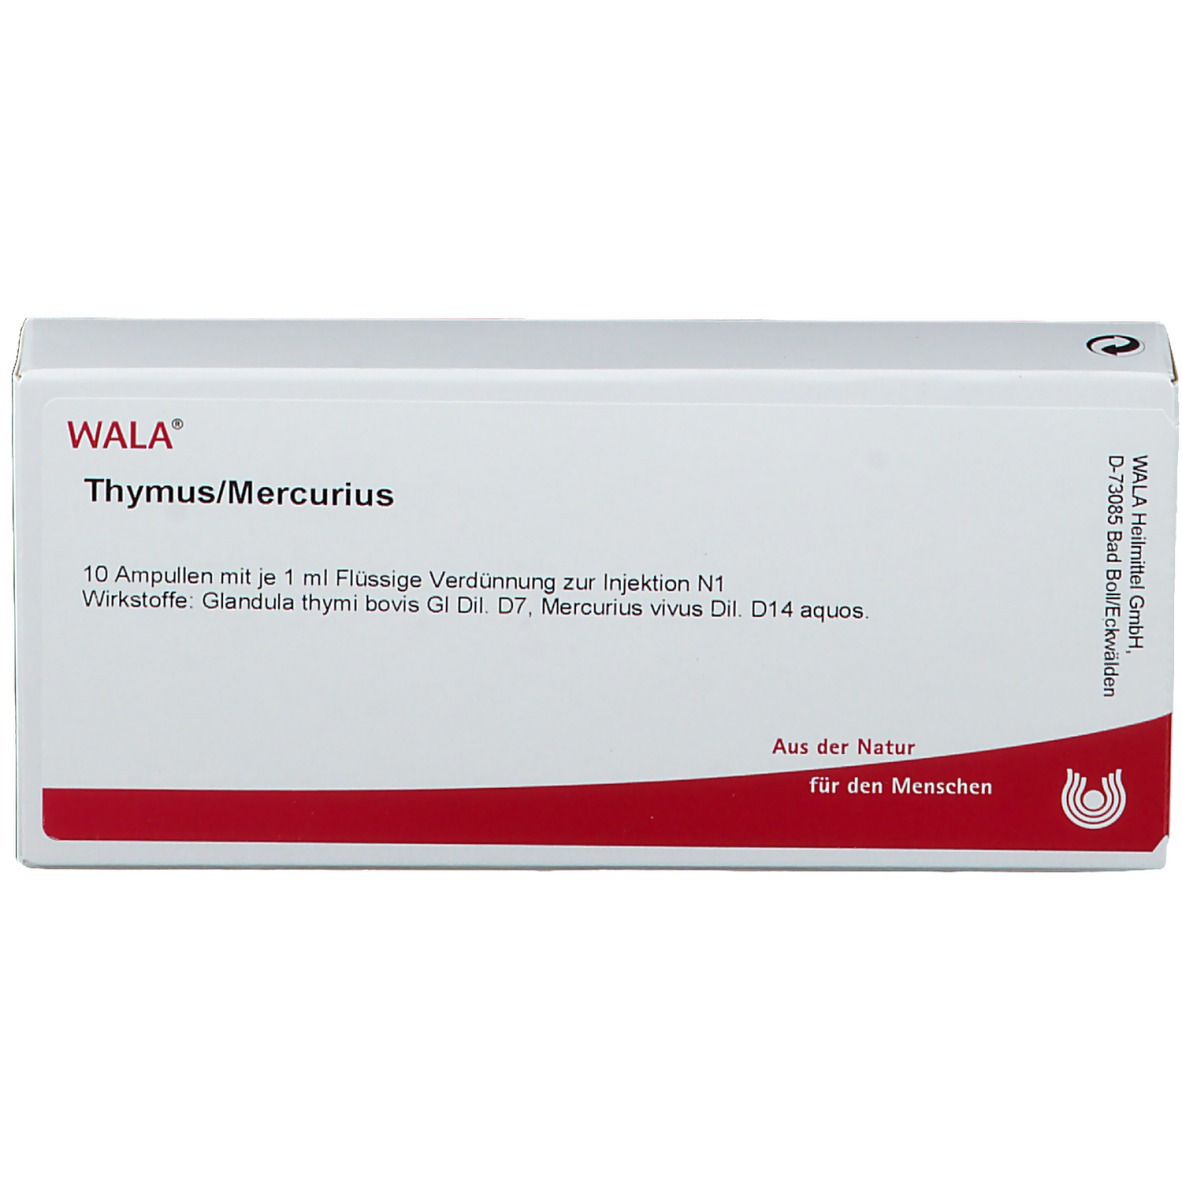 WALA® Thymus/Mercurius